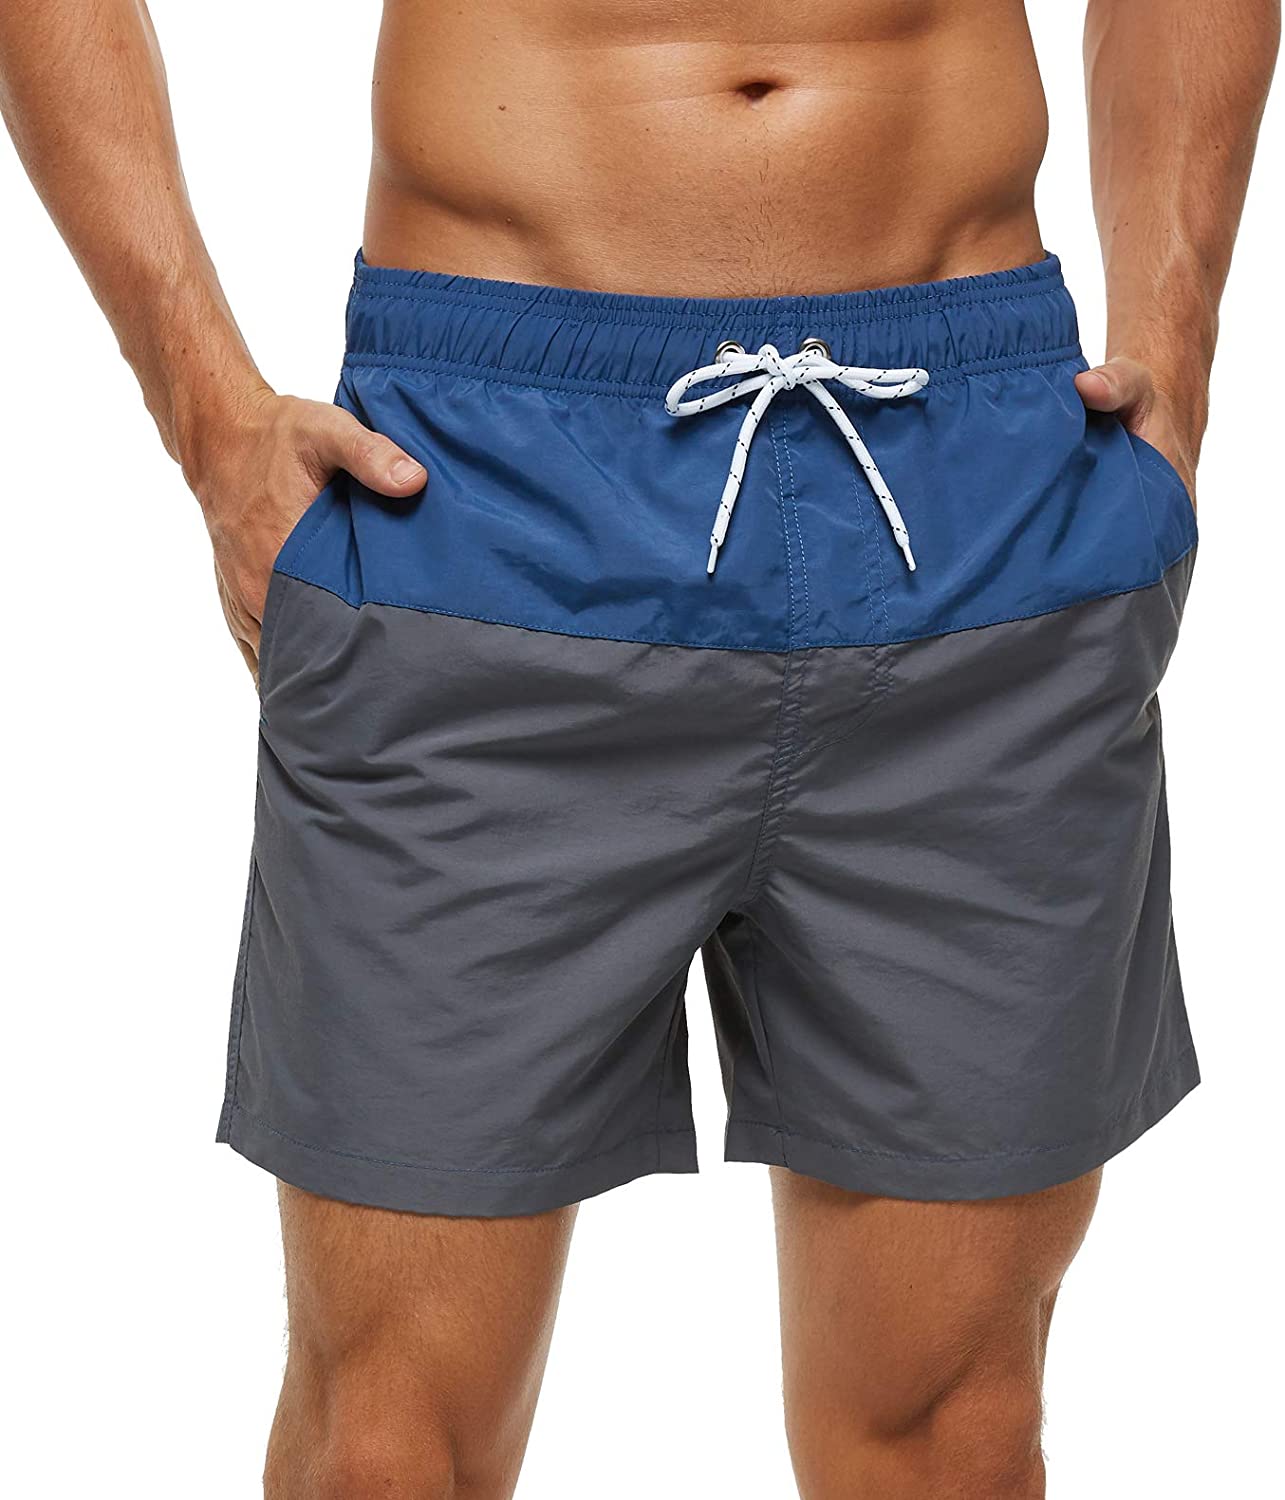 SILKWORLD Mens Swim Trunks Quick Dry Beach Shorts with Pockets 